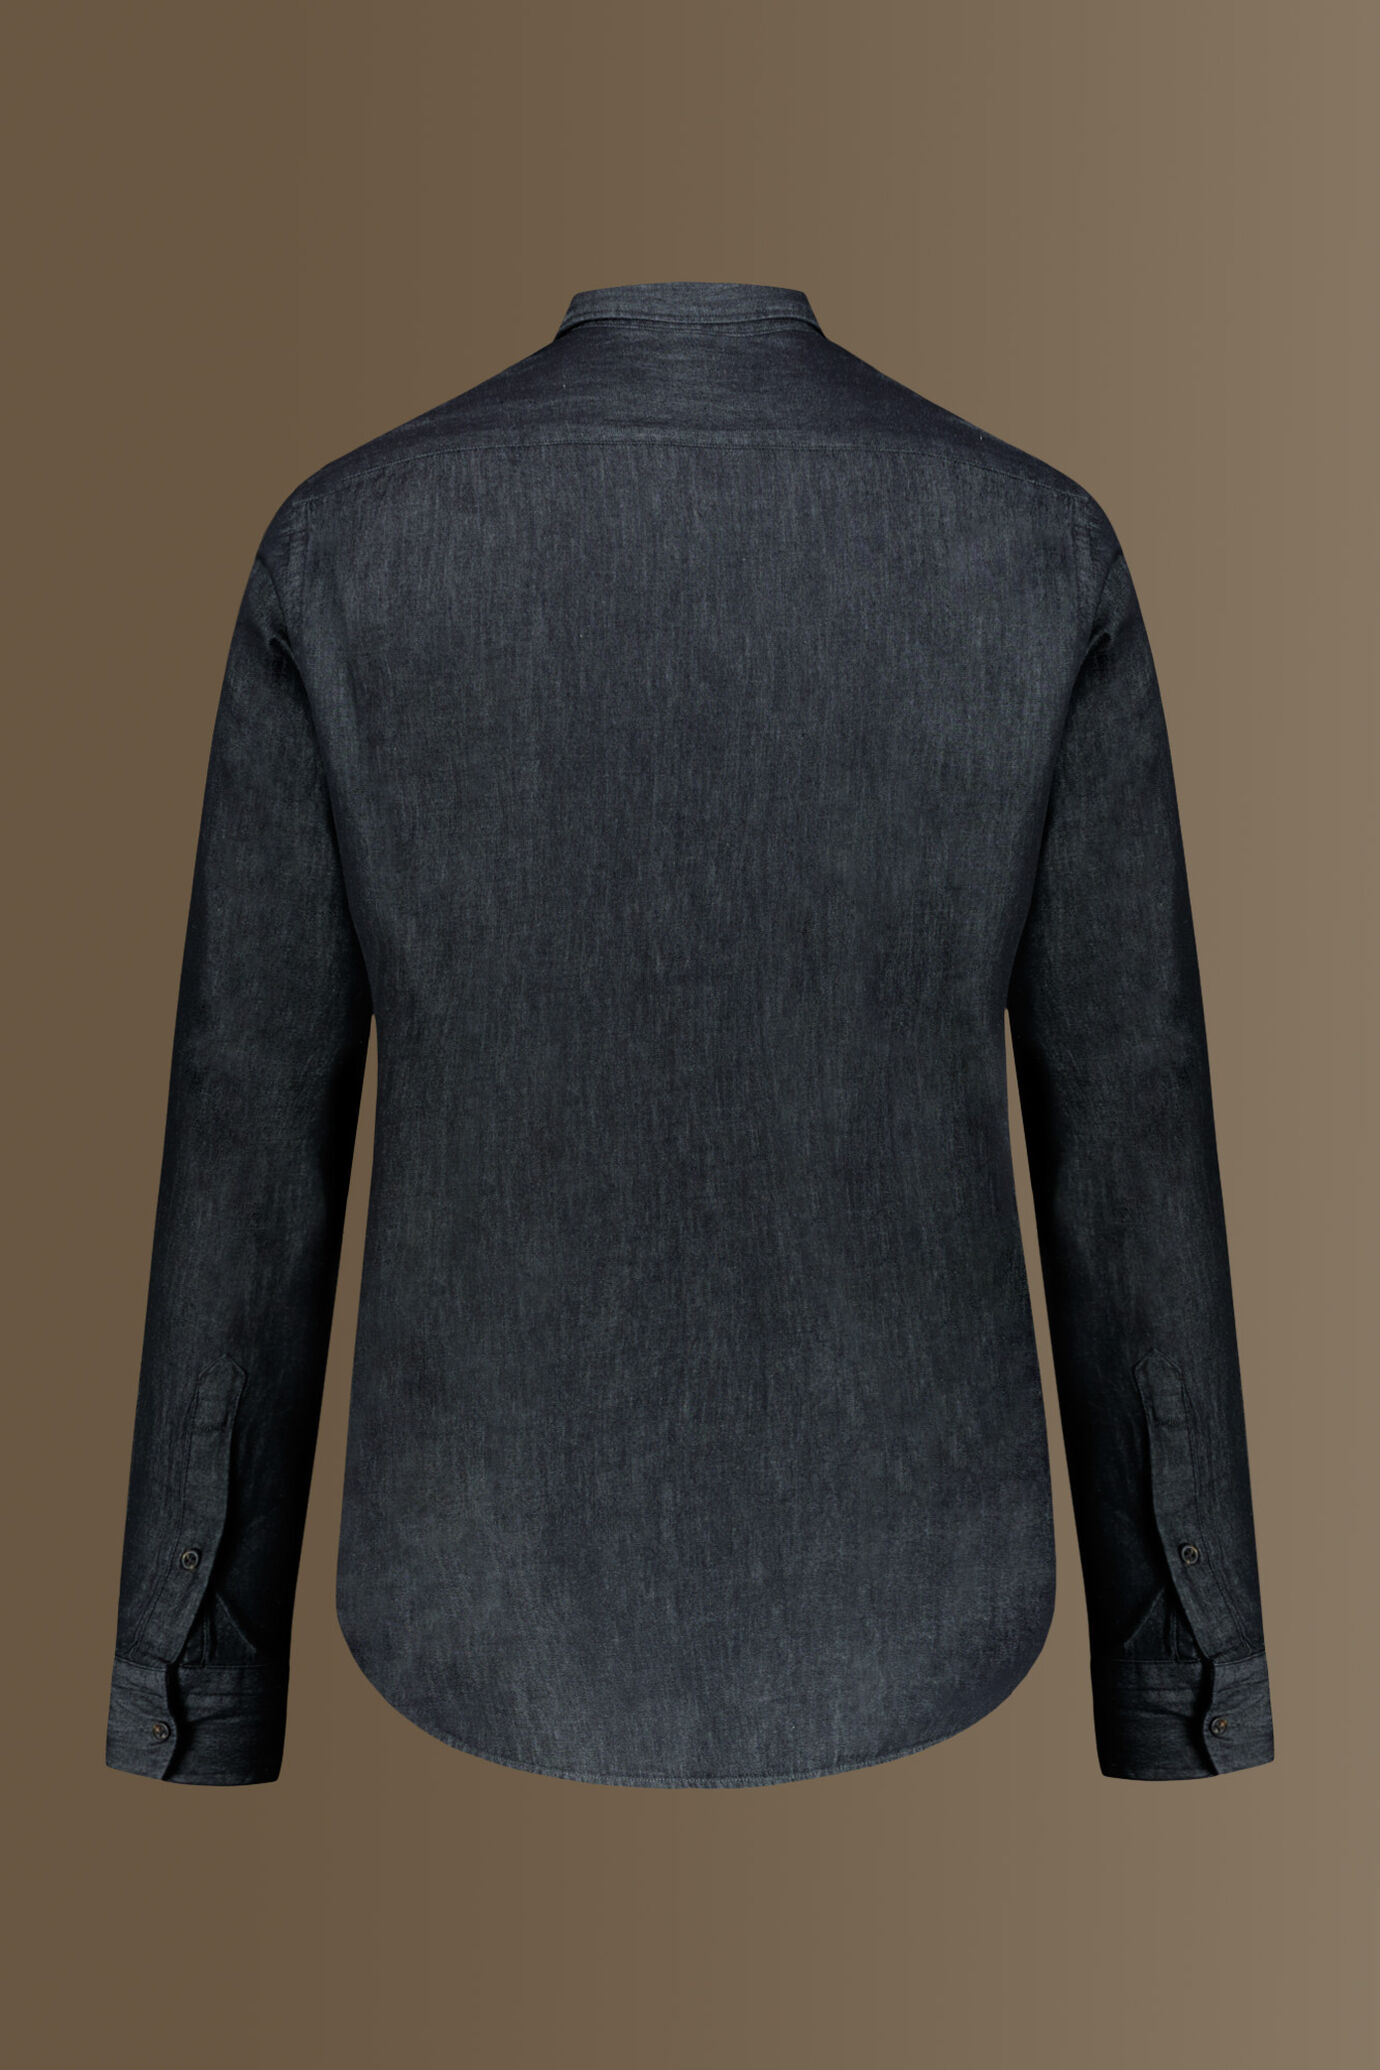 Camicia uomo casual collo francese 100% cotone denim grigio scuro image number 4